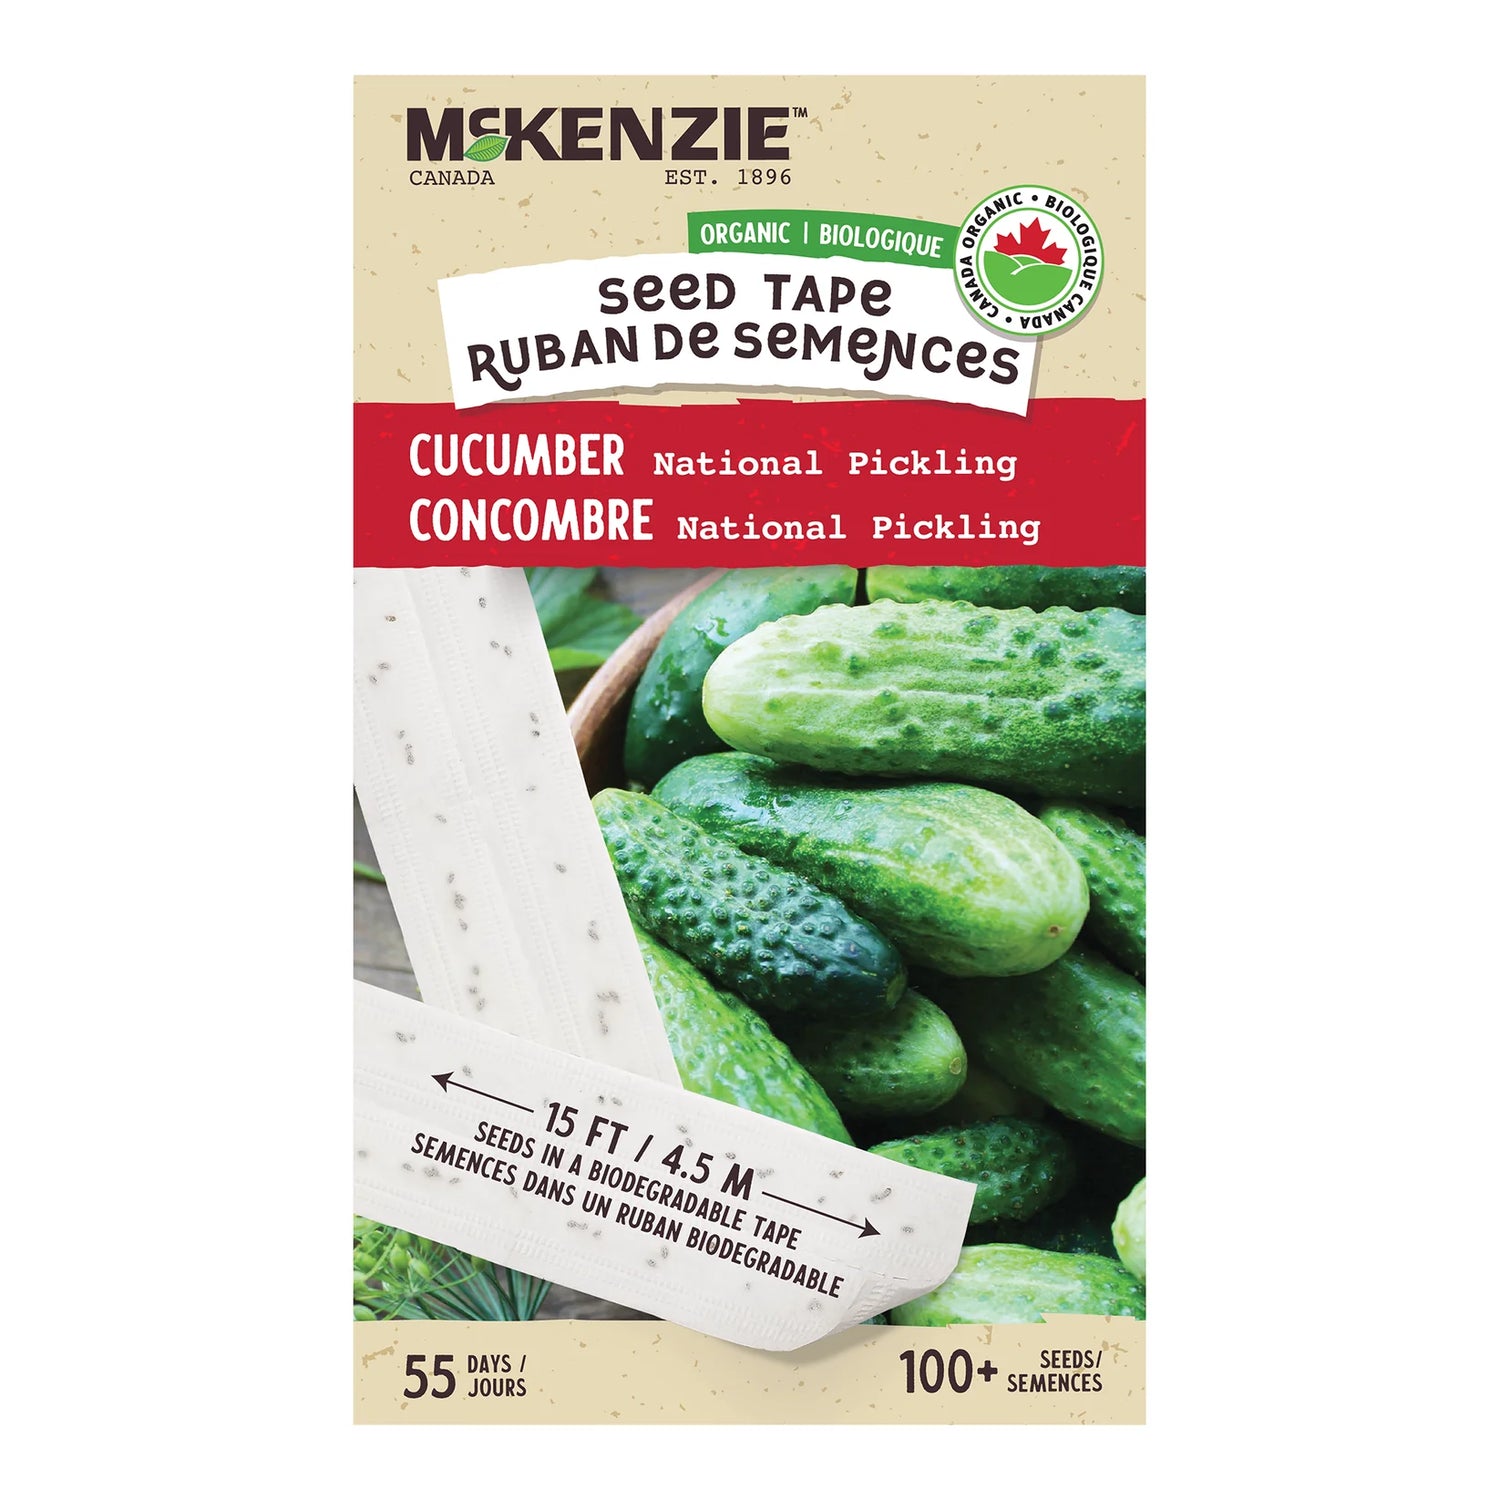 Organic Cucumber National Pickling Seed Tape